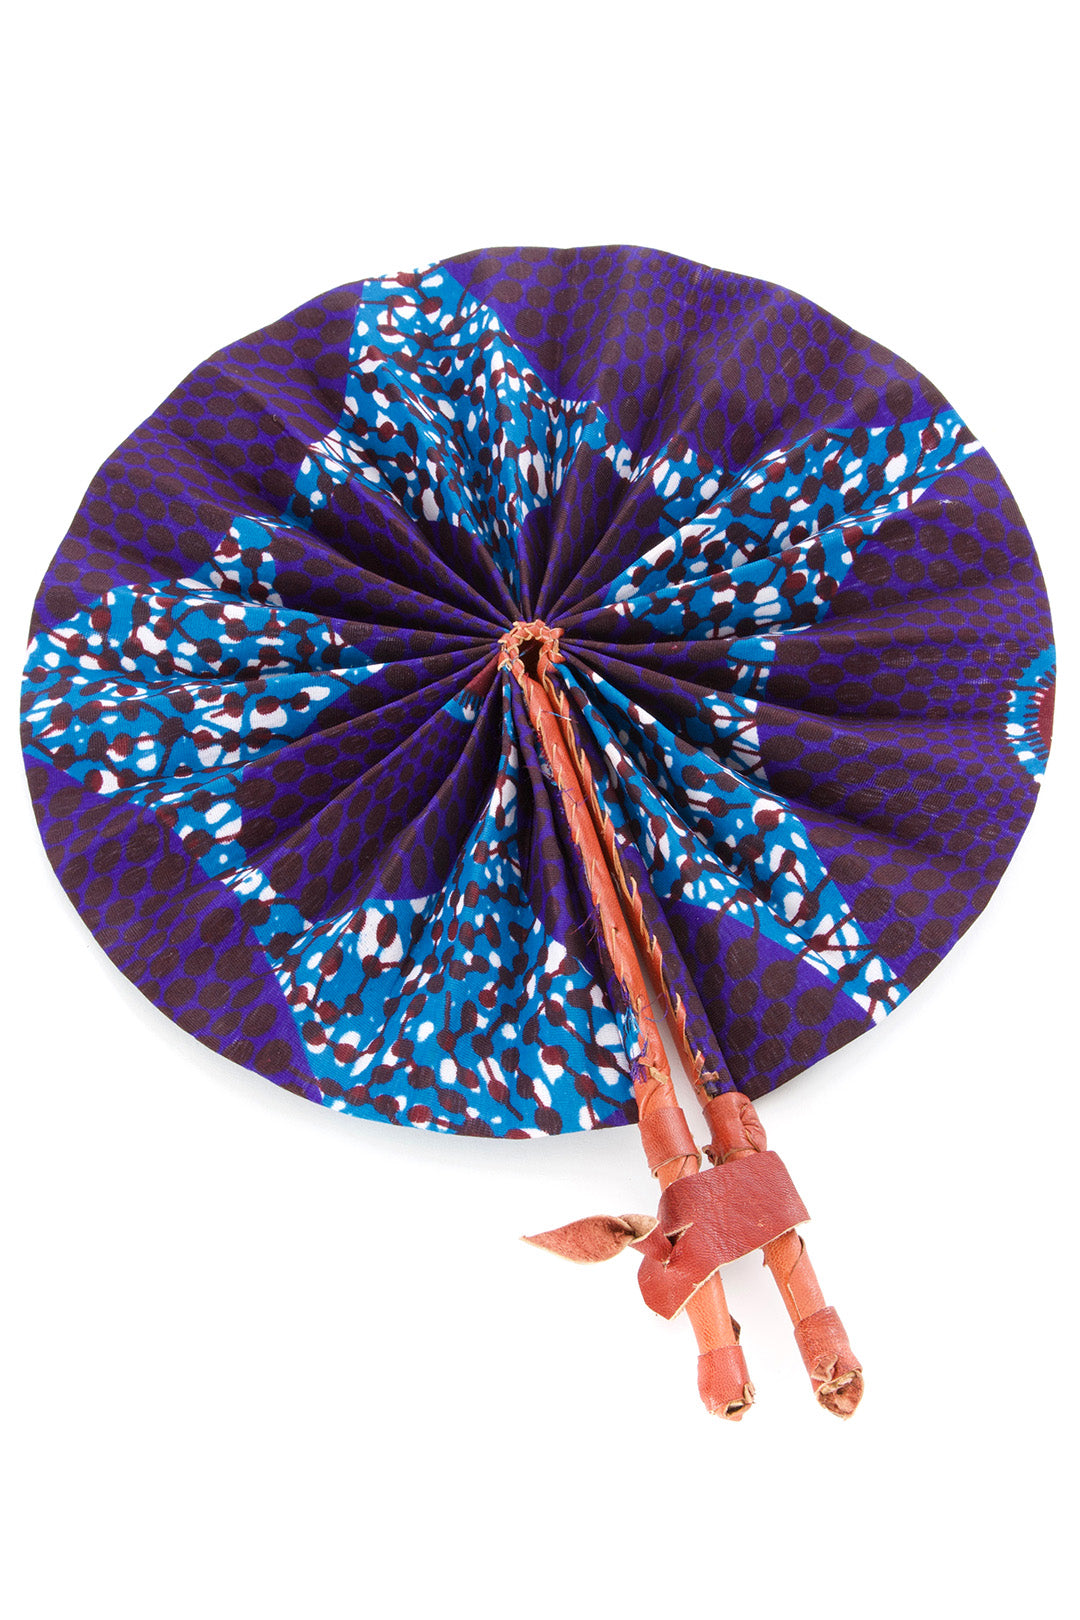 Iris Canopy Ankara Cloth and Leather Folding Fan